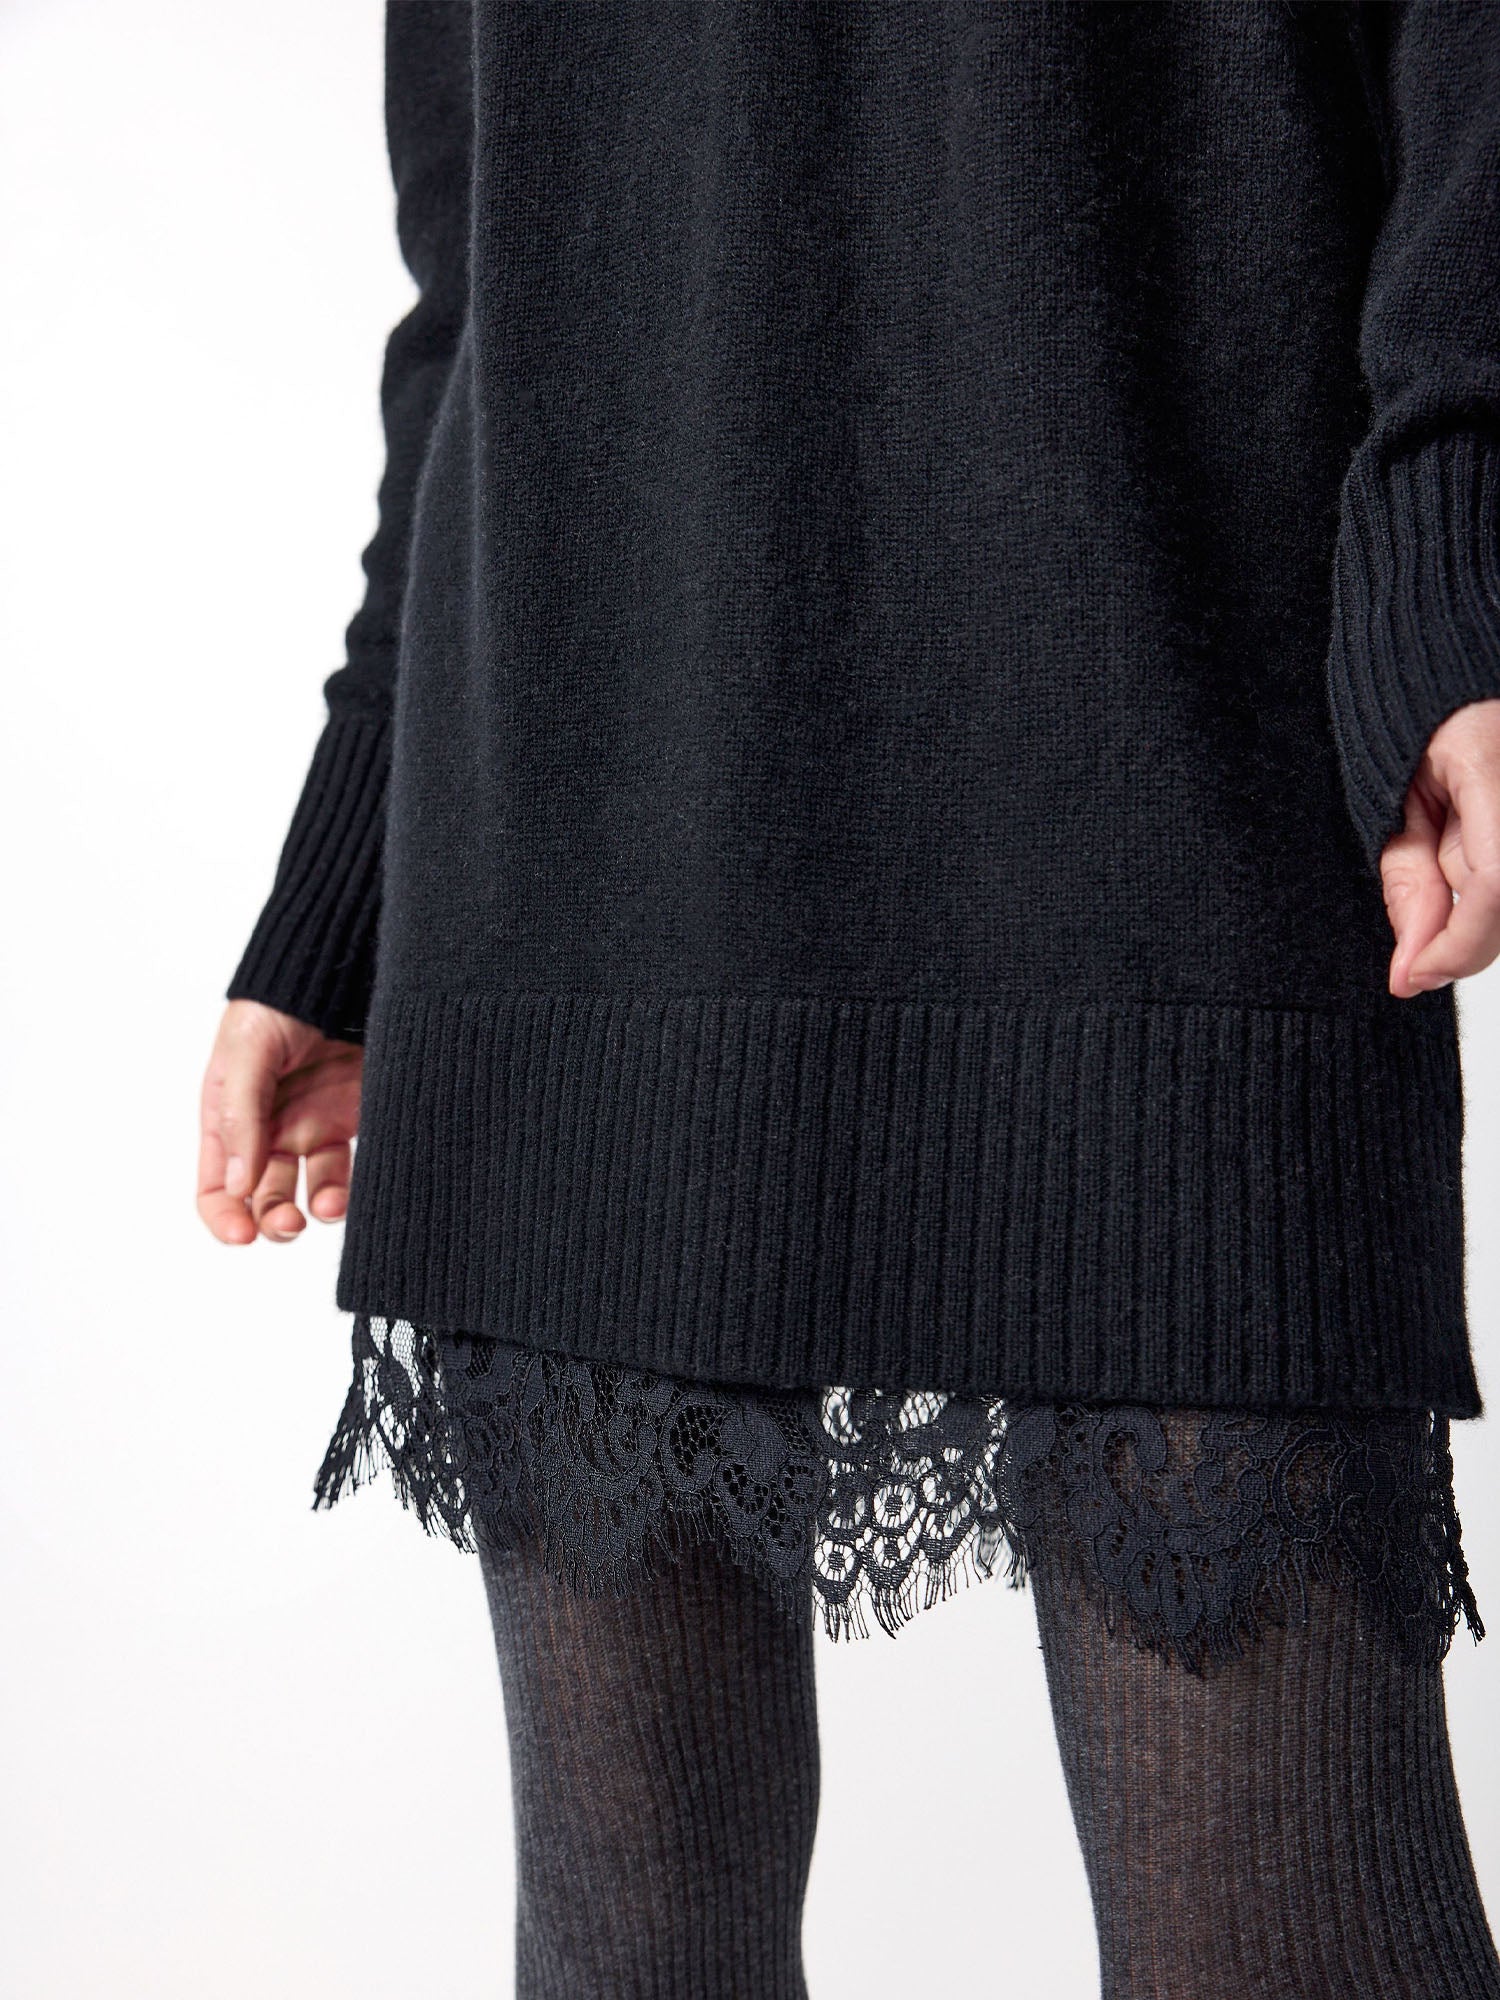 Elisa mini black lace sweater dress close up 2